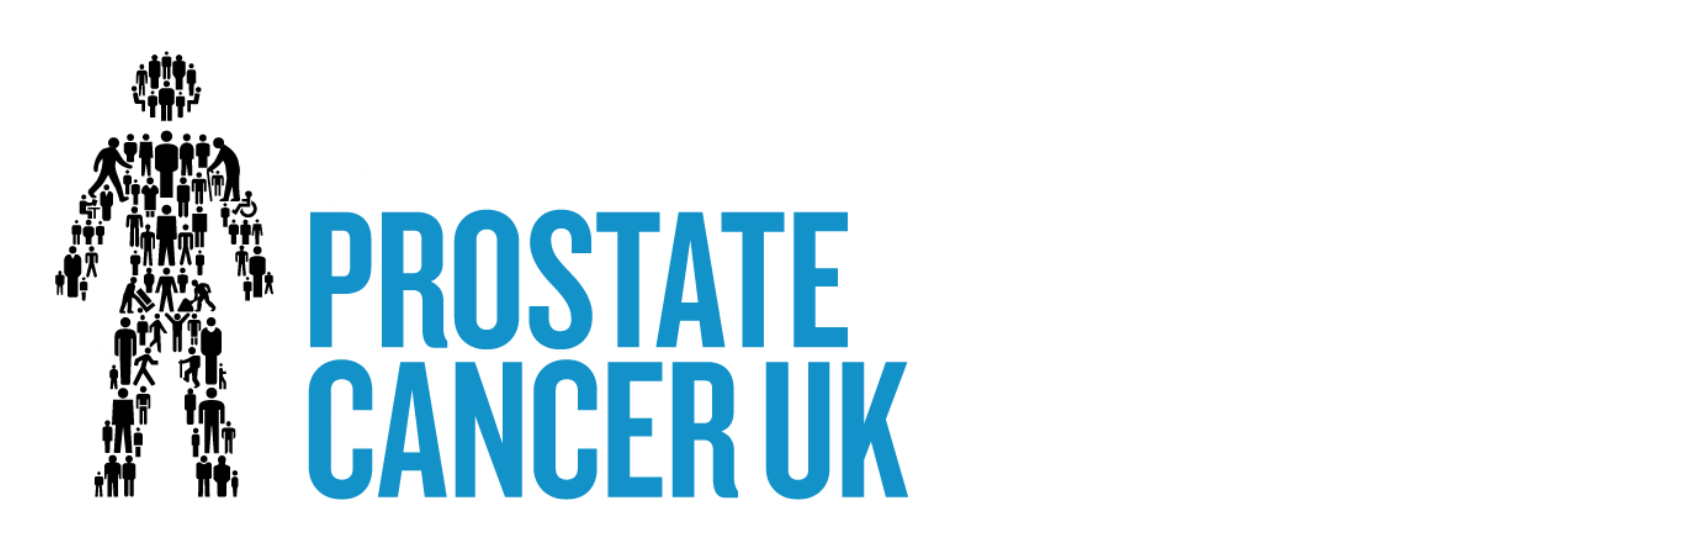 Prostate Cancer UK and RAIQC Logos